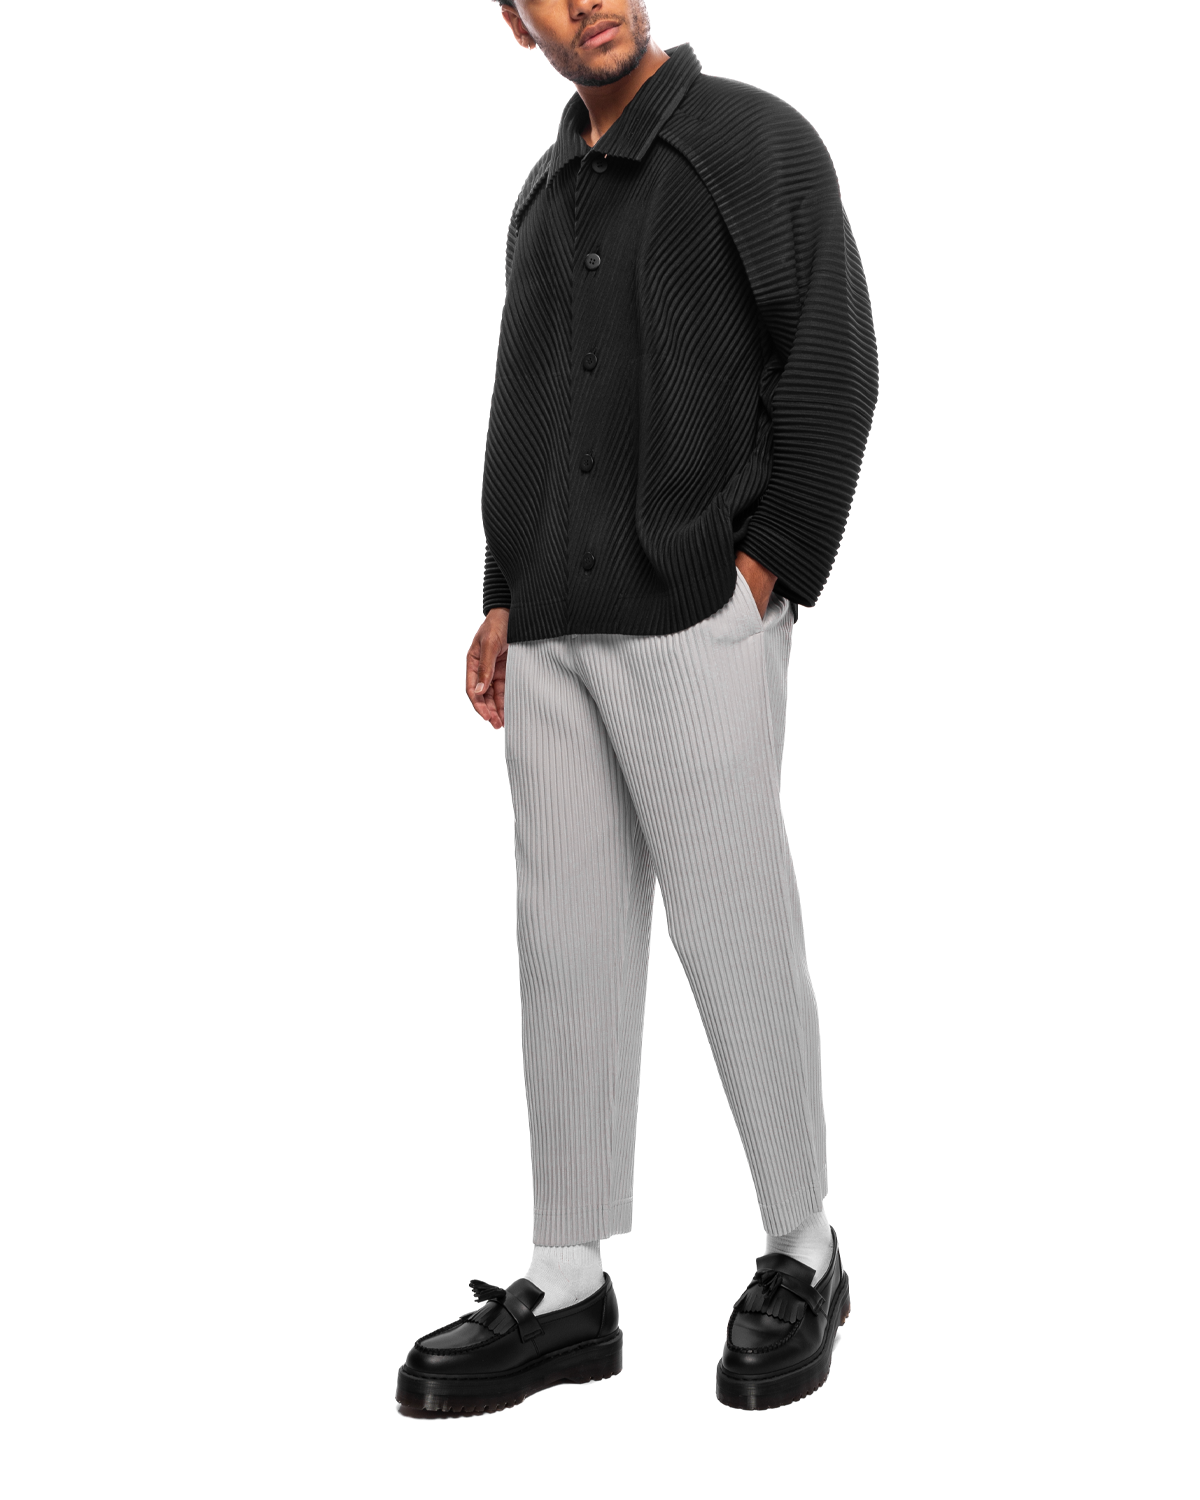 Pants Basics AW23 Lt Gray